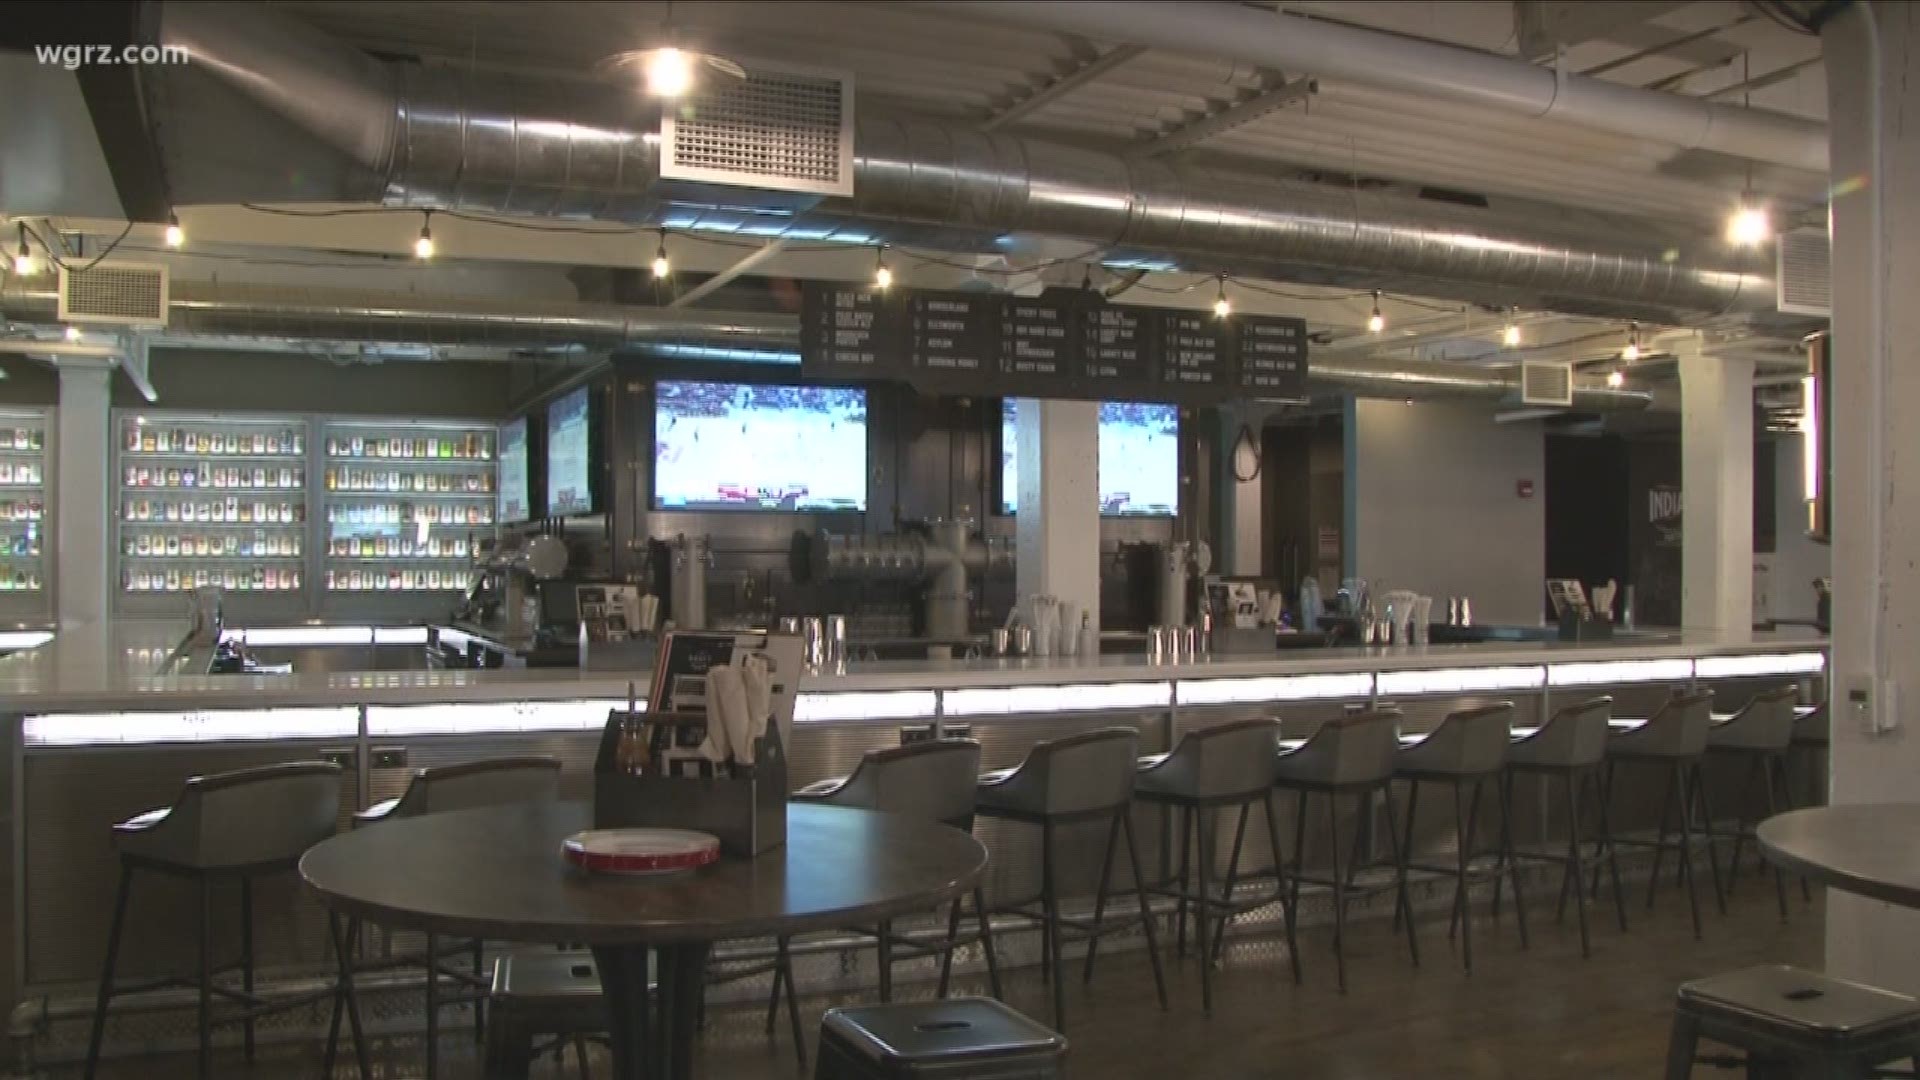 A Look Inside The New Labatt Brew House